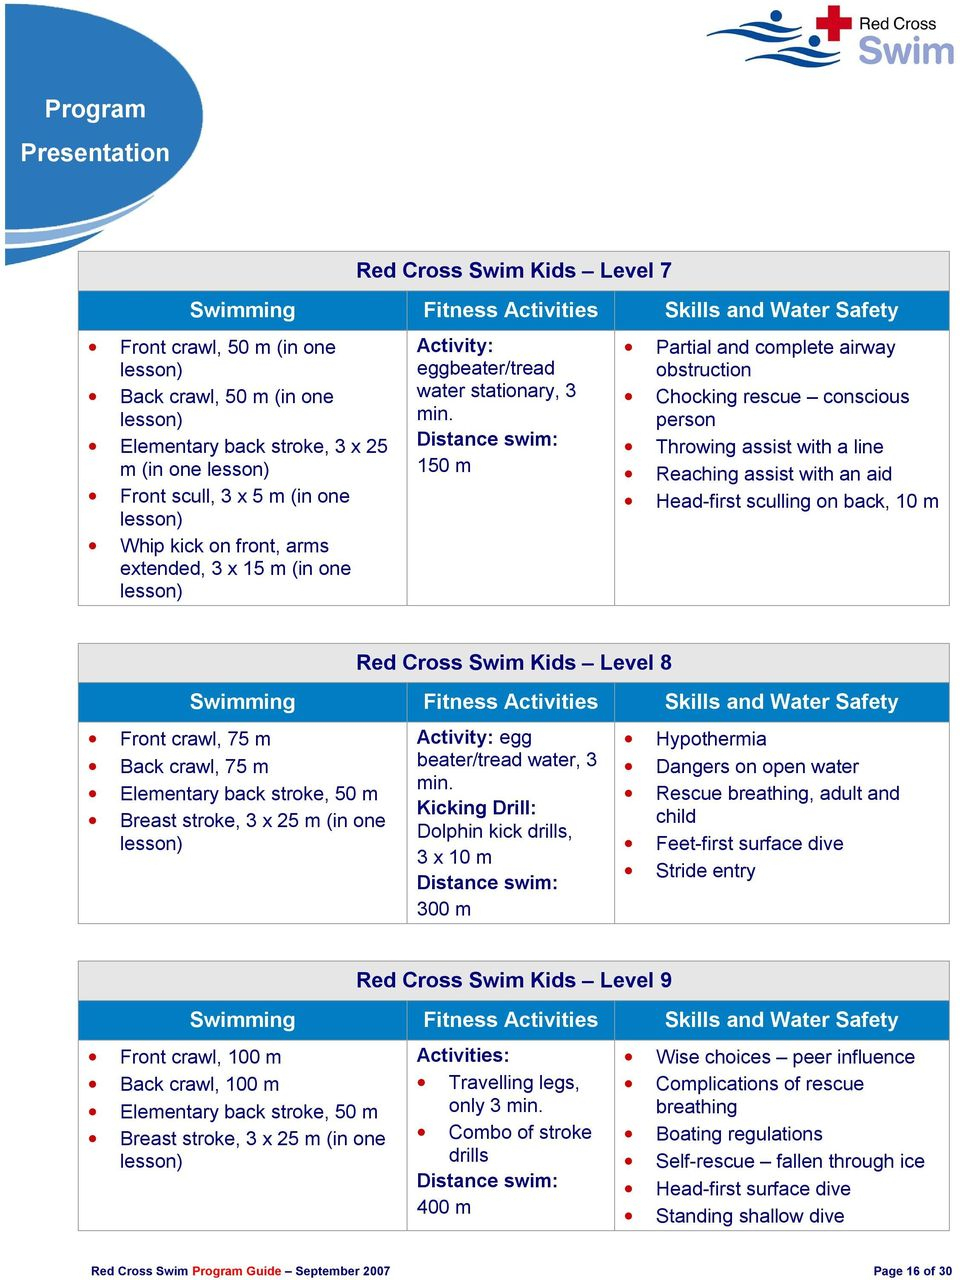 Red Cross Swim Program Guide - Pdf Free Download